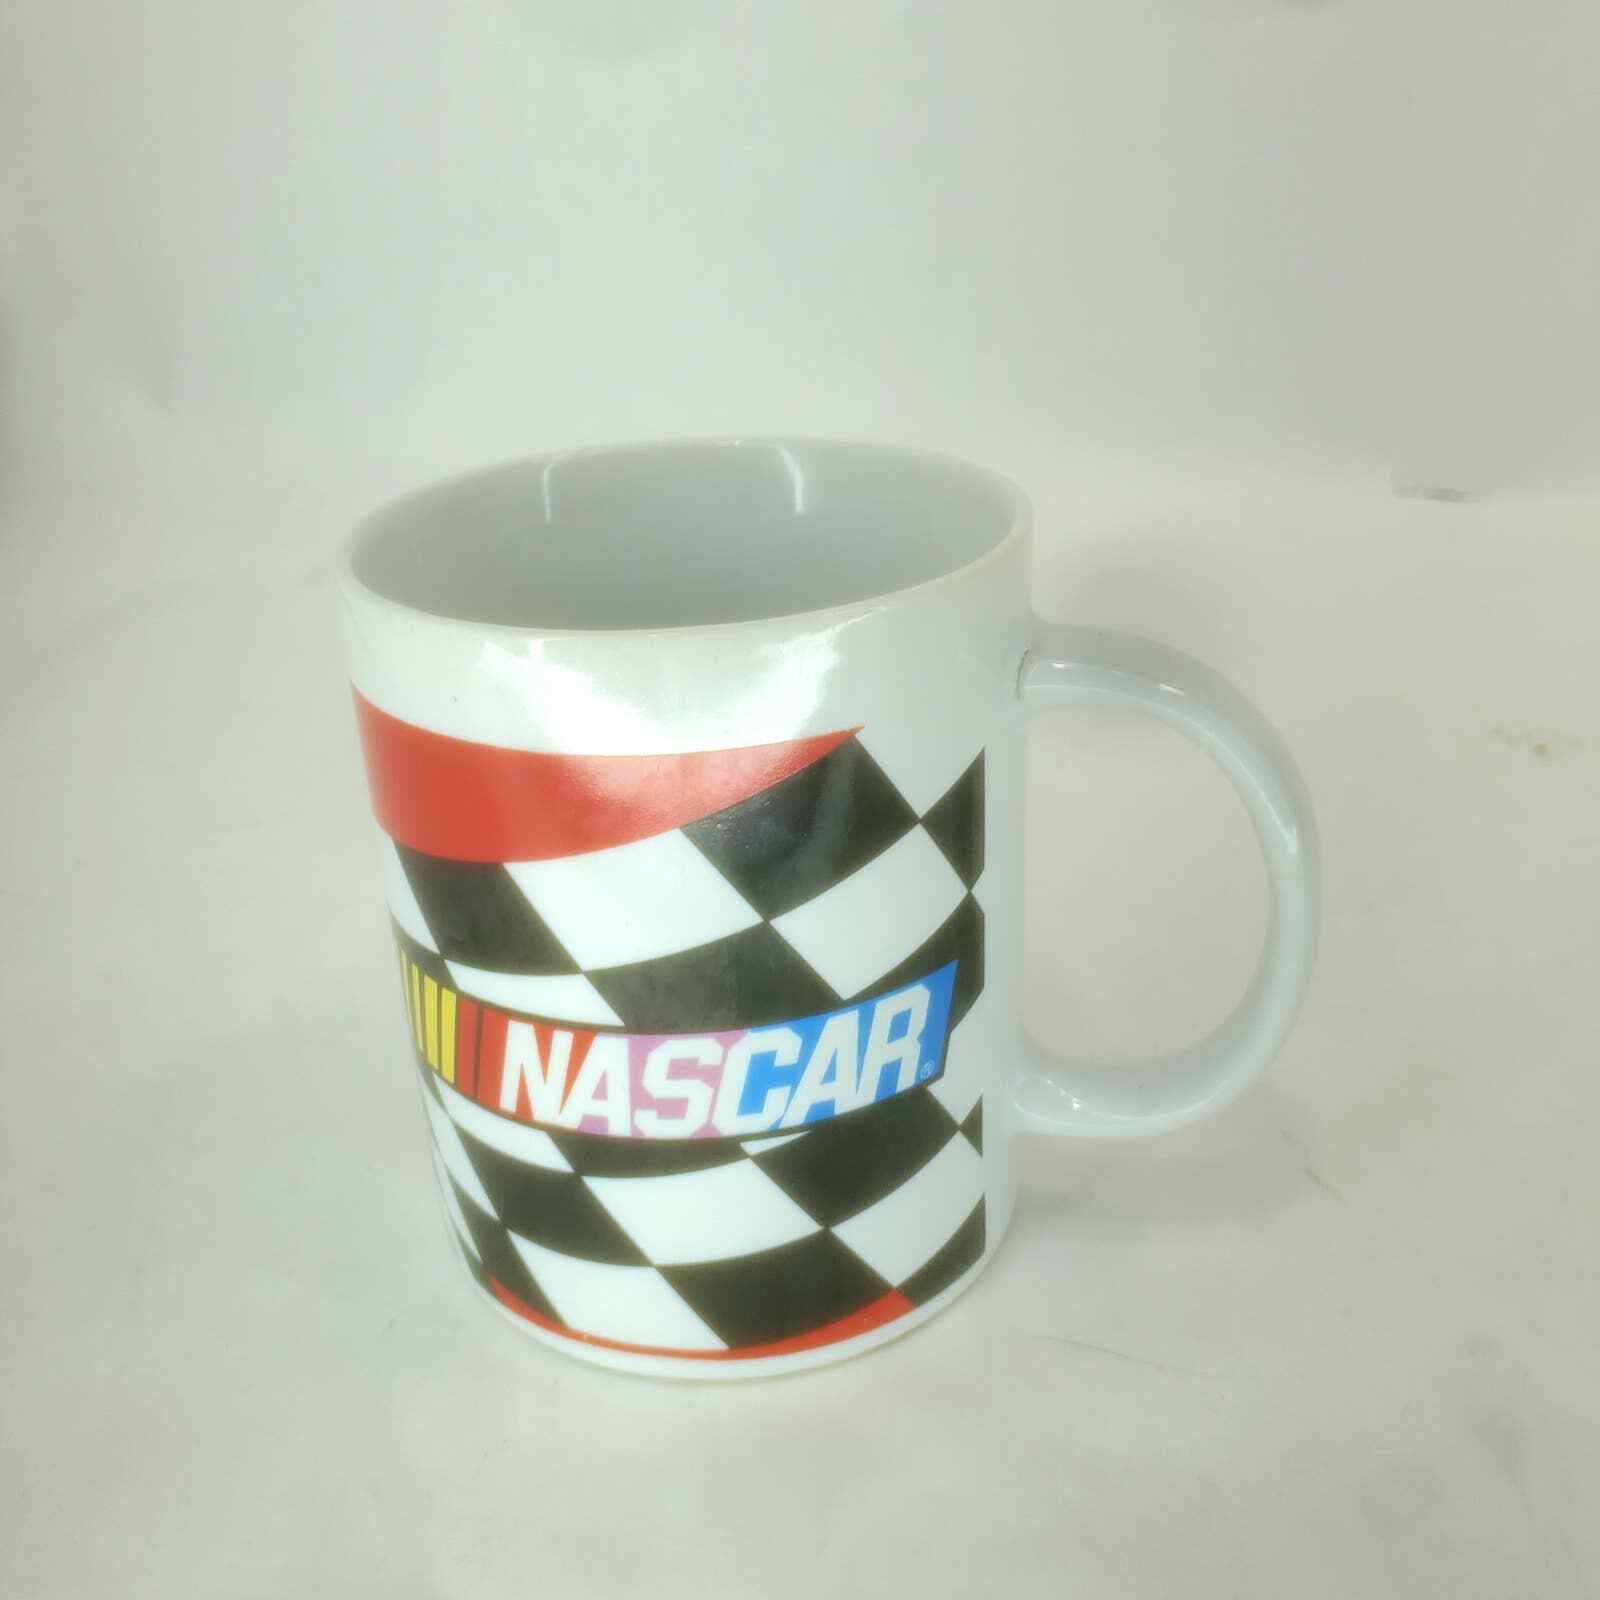 2005 Nascar Checkered Coffee Mug by Sherwood collectable